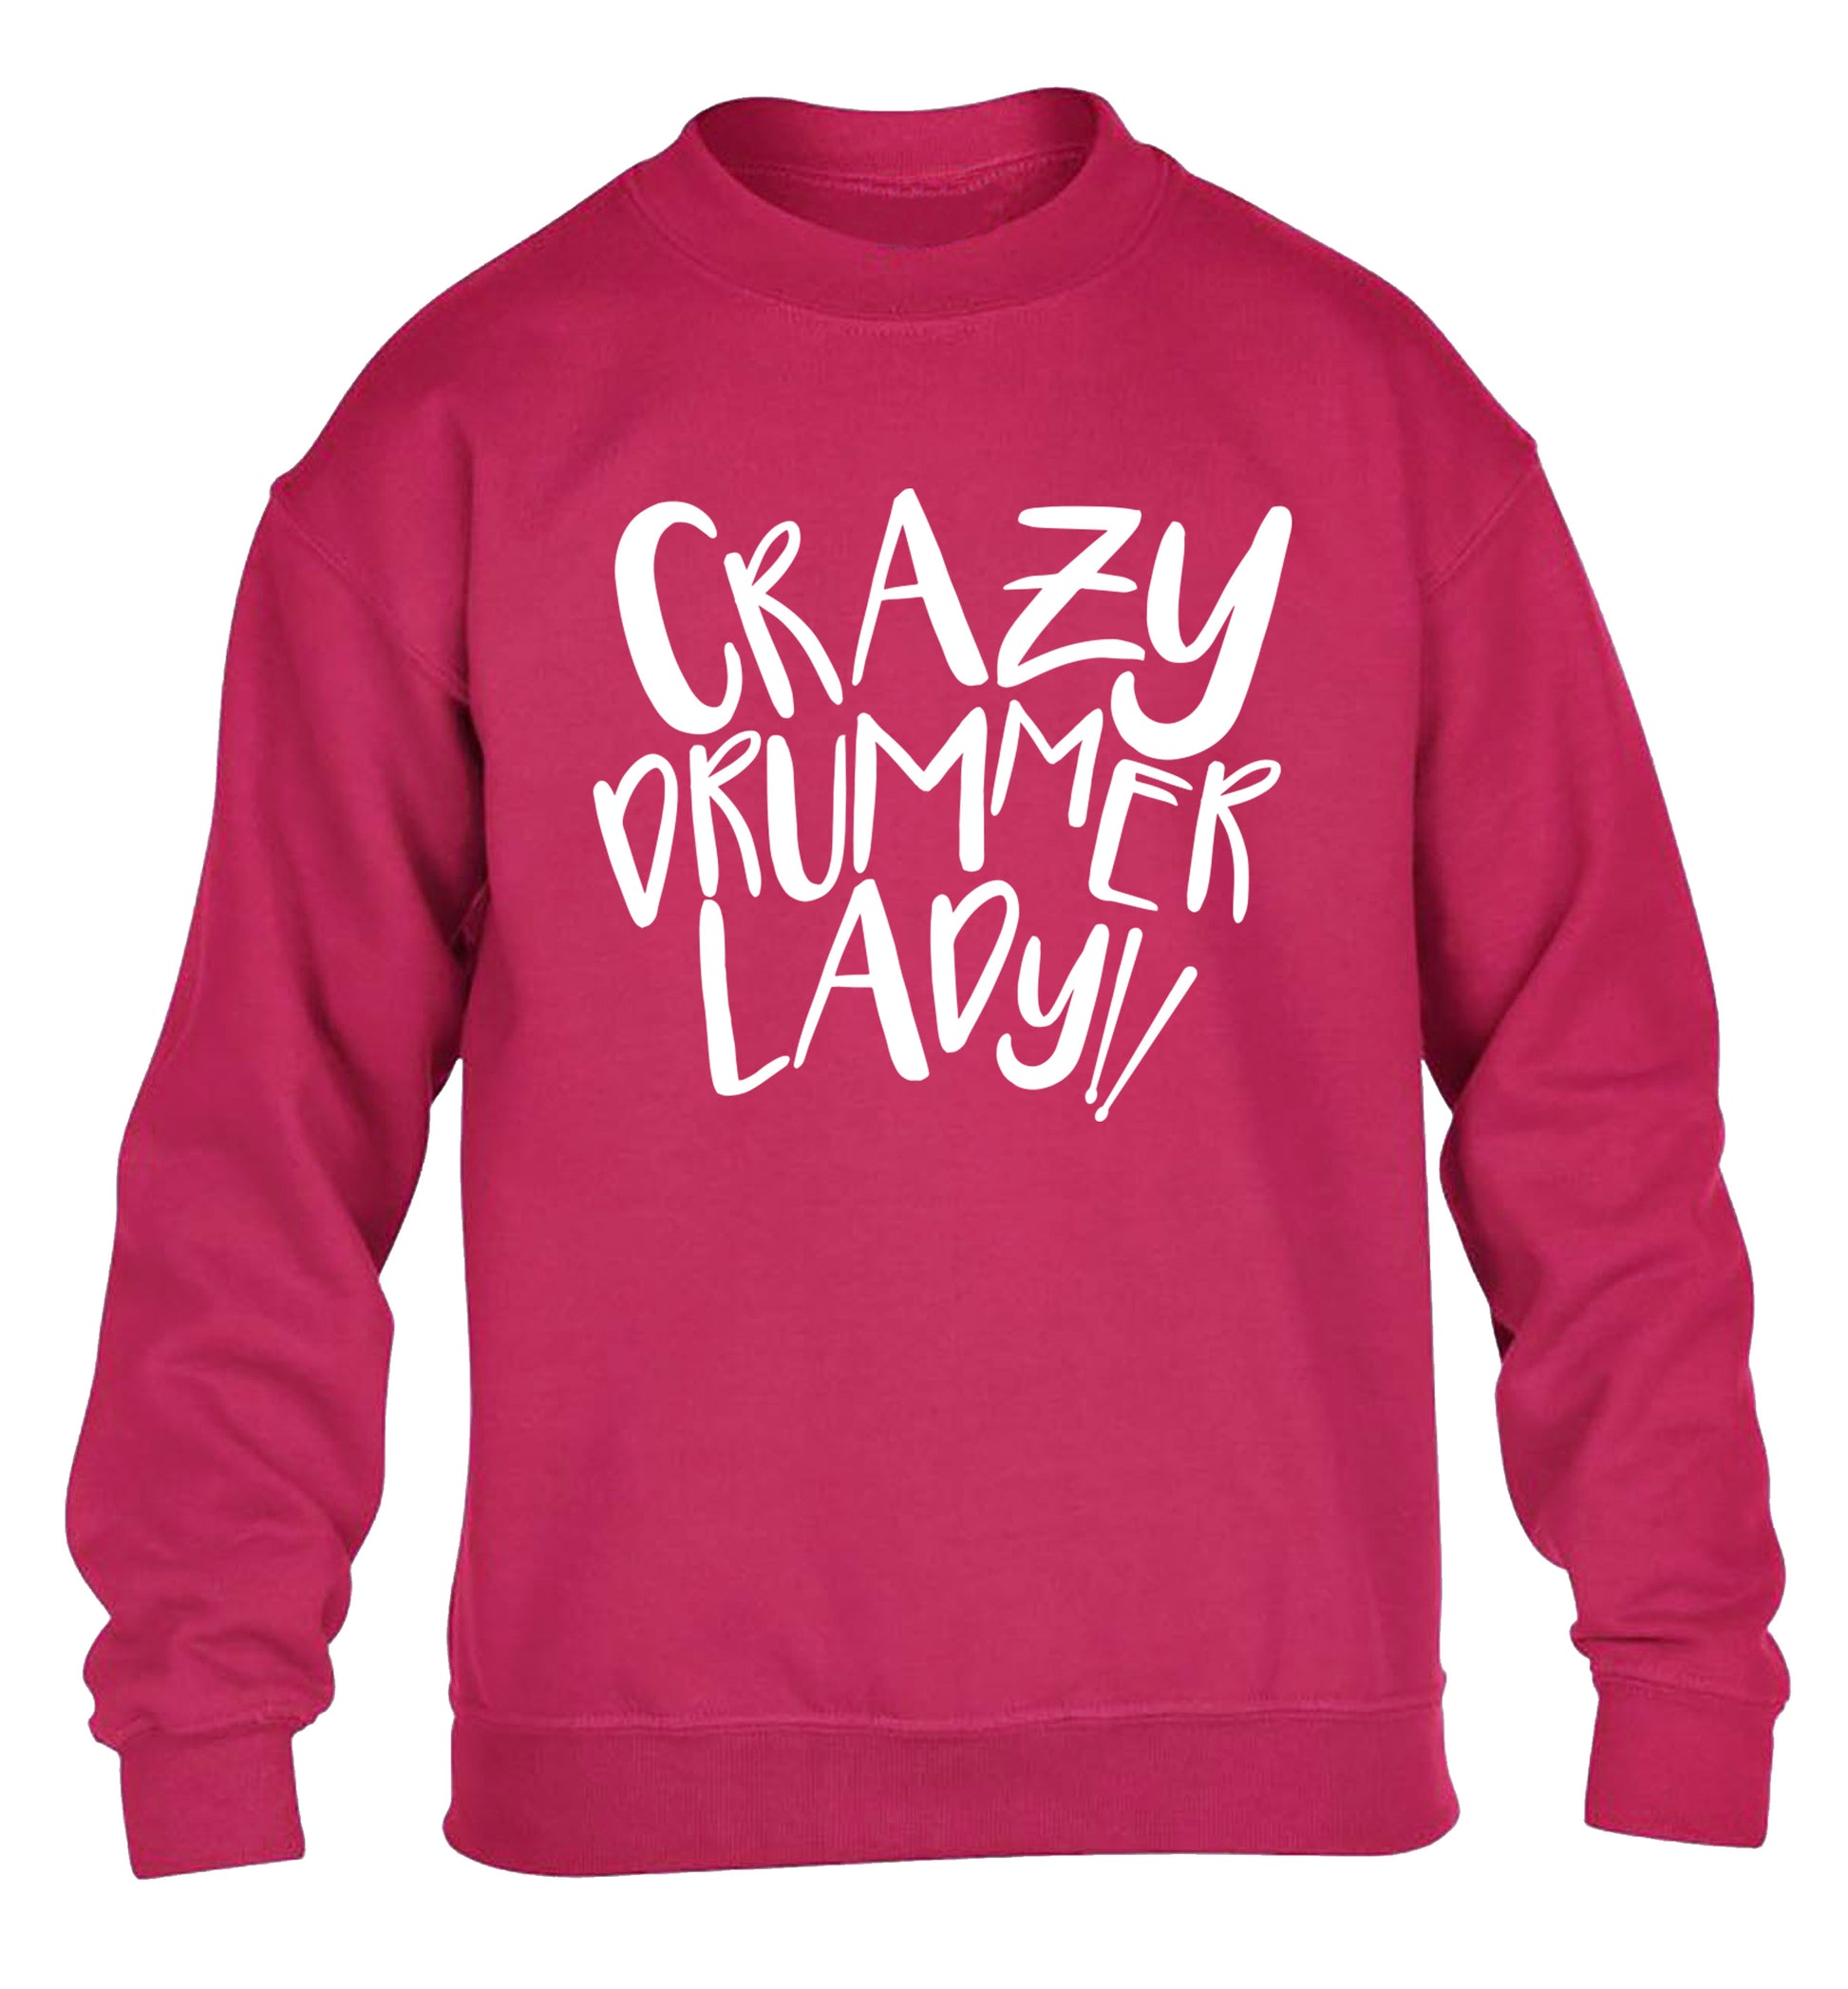 Crazy drummer lady children's pink sweater 12-14 Years